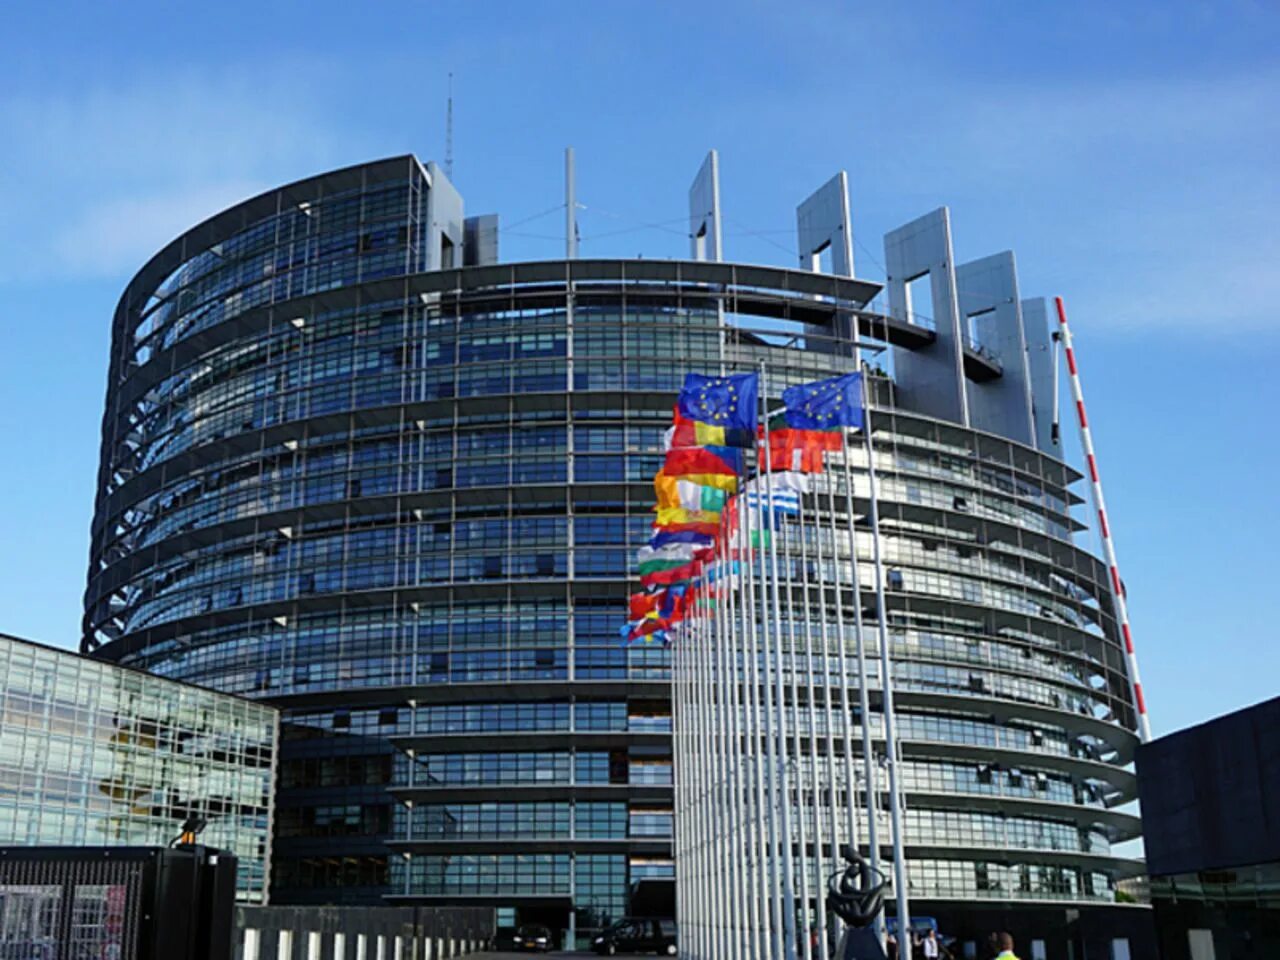 Страсбург Европарламент. Здание Европарламента в Страсбурге. Европейский парламент в Брюсселе. Здание Европарламента в Брюсселе.